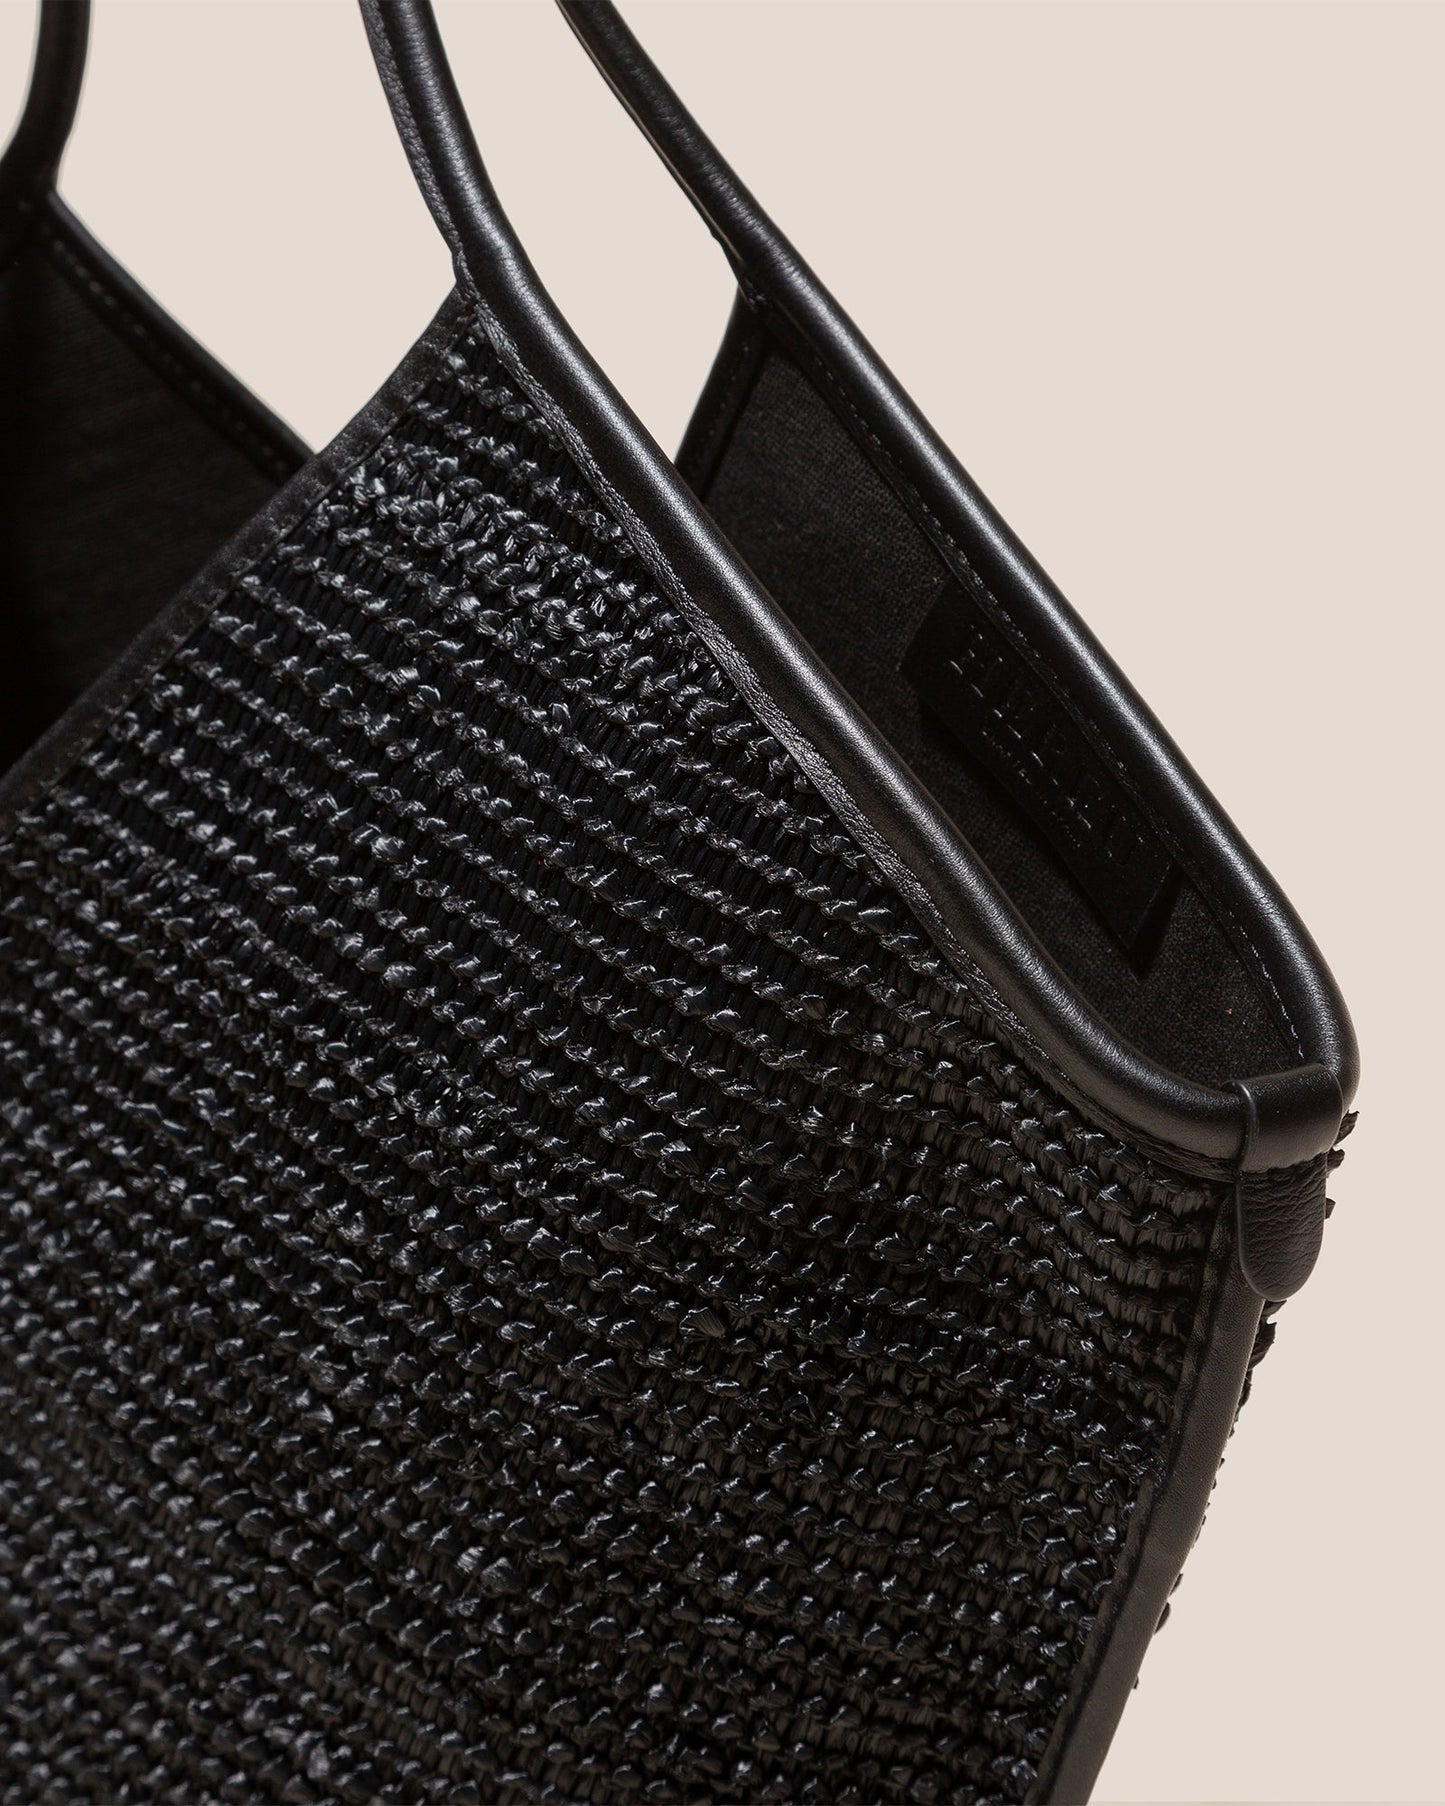 CALELLA RAFFIA - Leather-trimmed Tote Bag